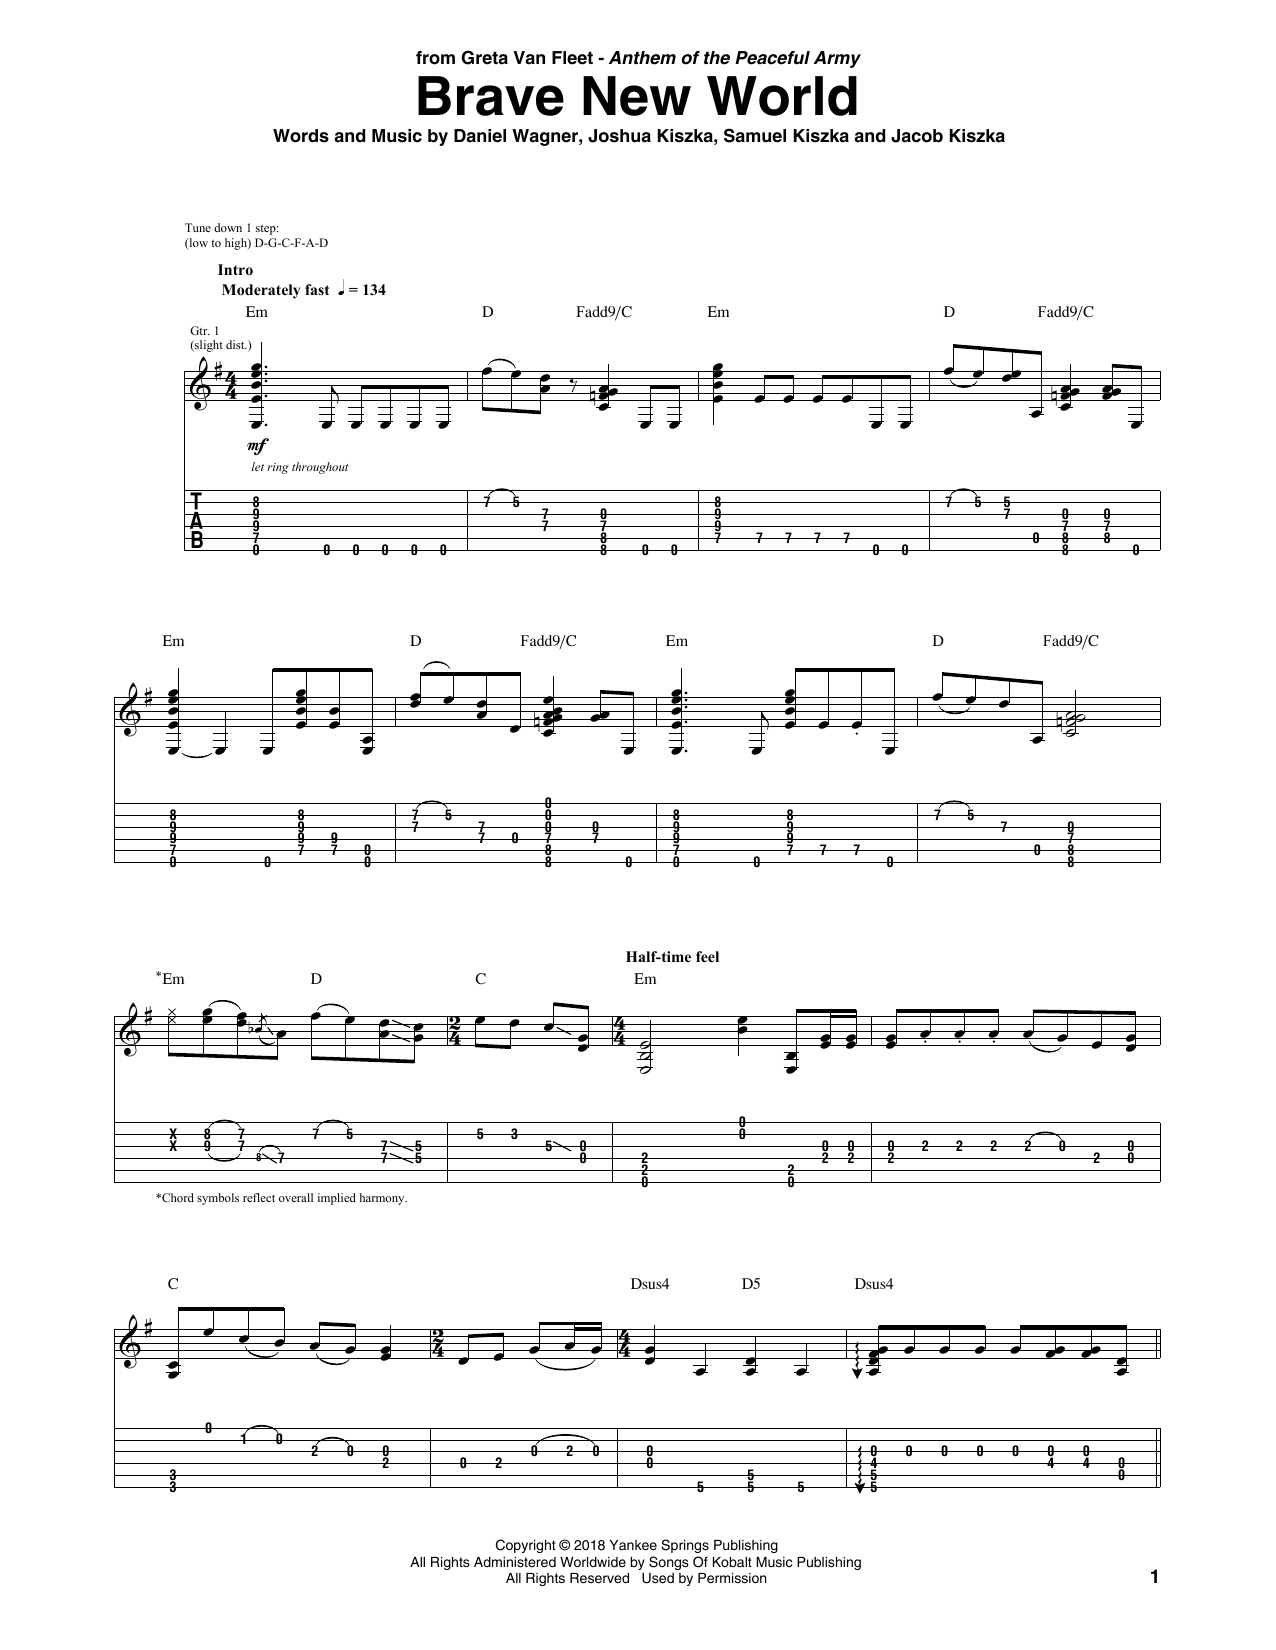 Greta Van Fleet Brave New World sheet music notes and chords arranged for Guitar Tab